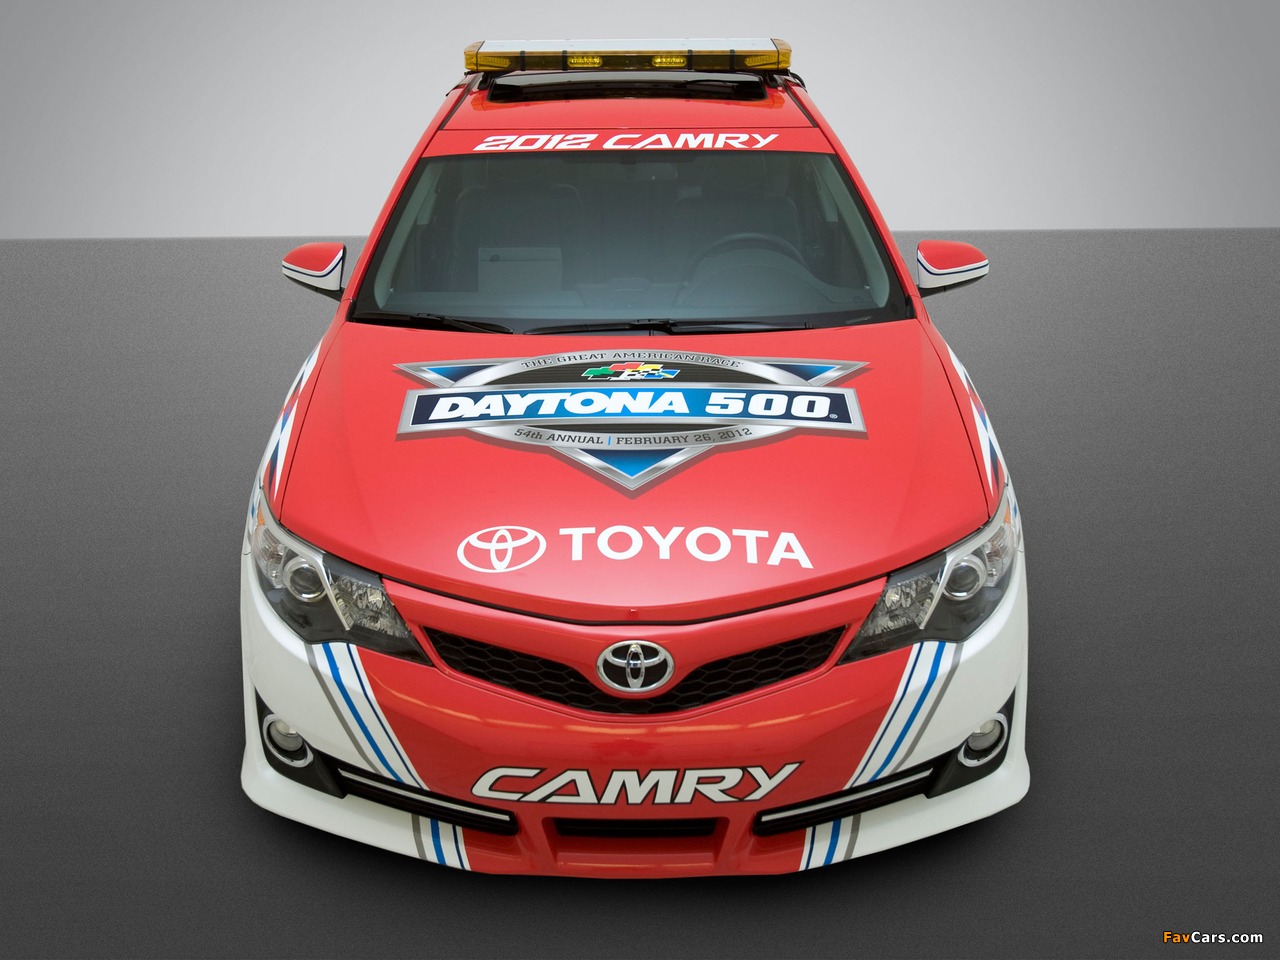 Toyota Camry SE Daytona 500 Pace Car 2012 photos (1280 x 960)